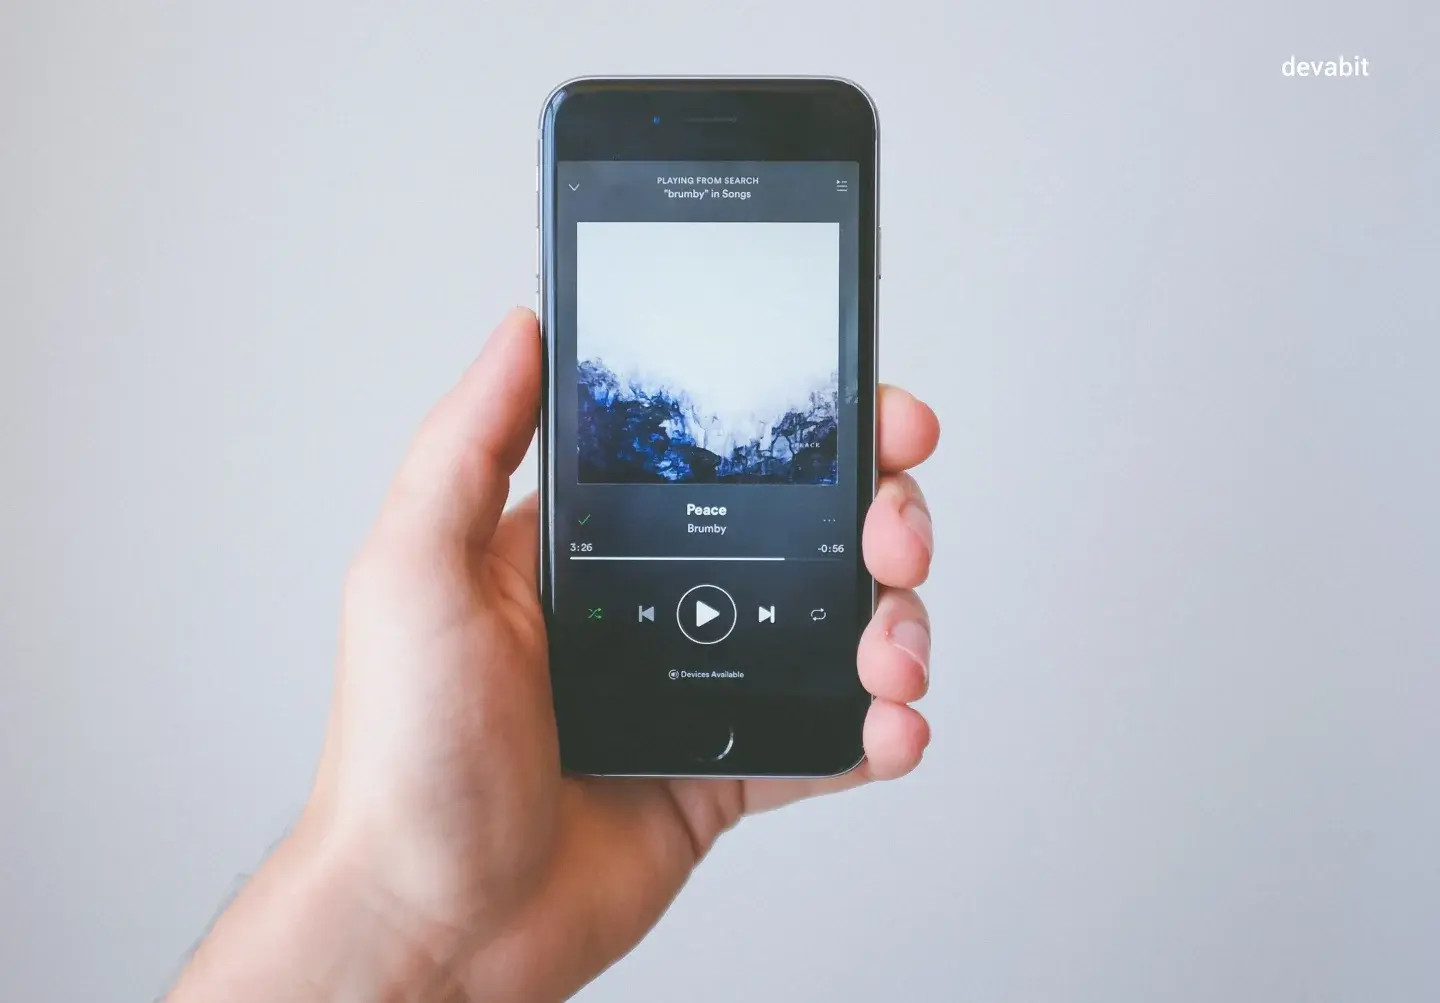 Music app features: devabit